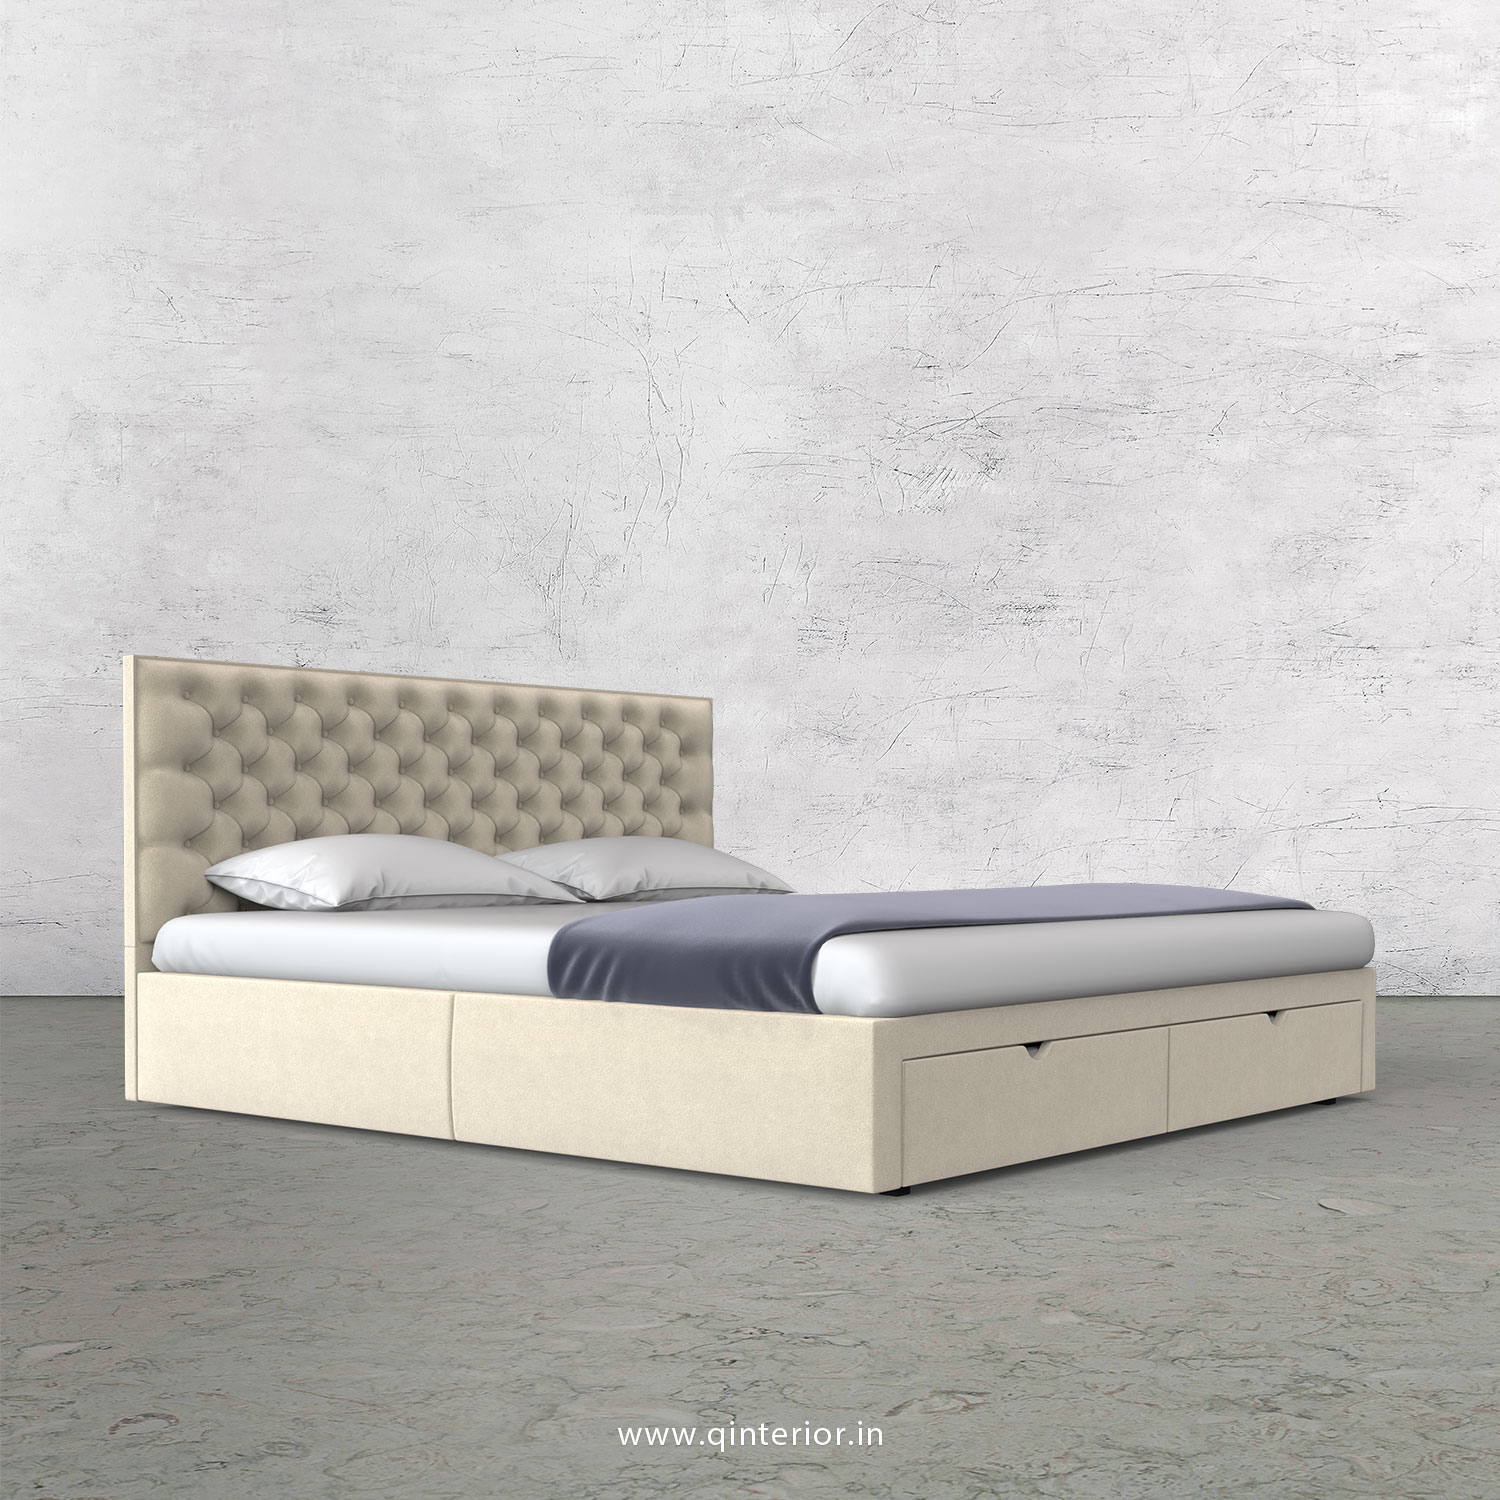 Orion King Size Storage Bed in Velvet Fabric - KBD001 VL01